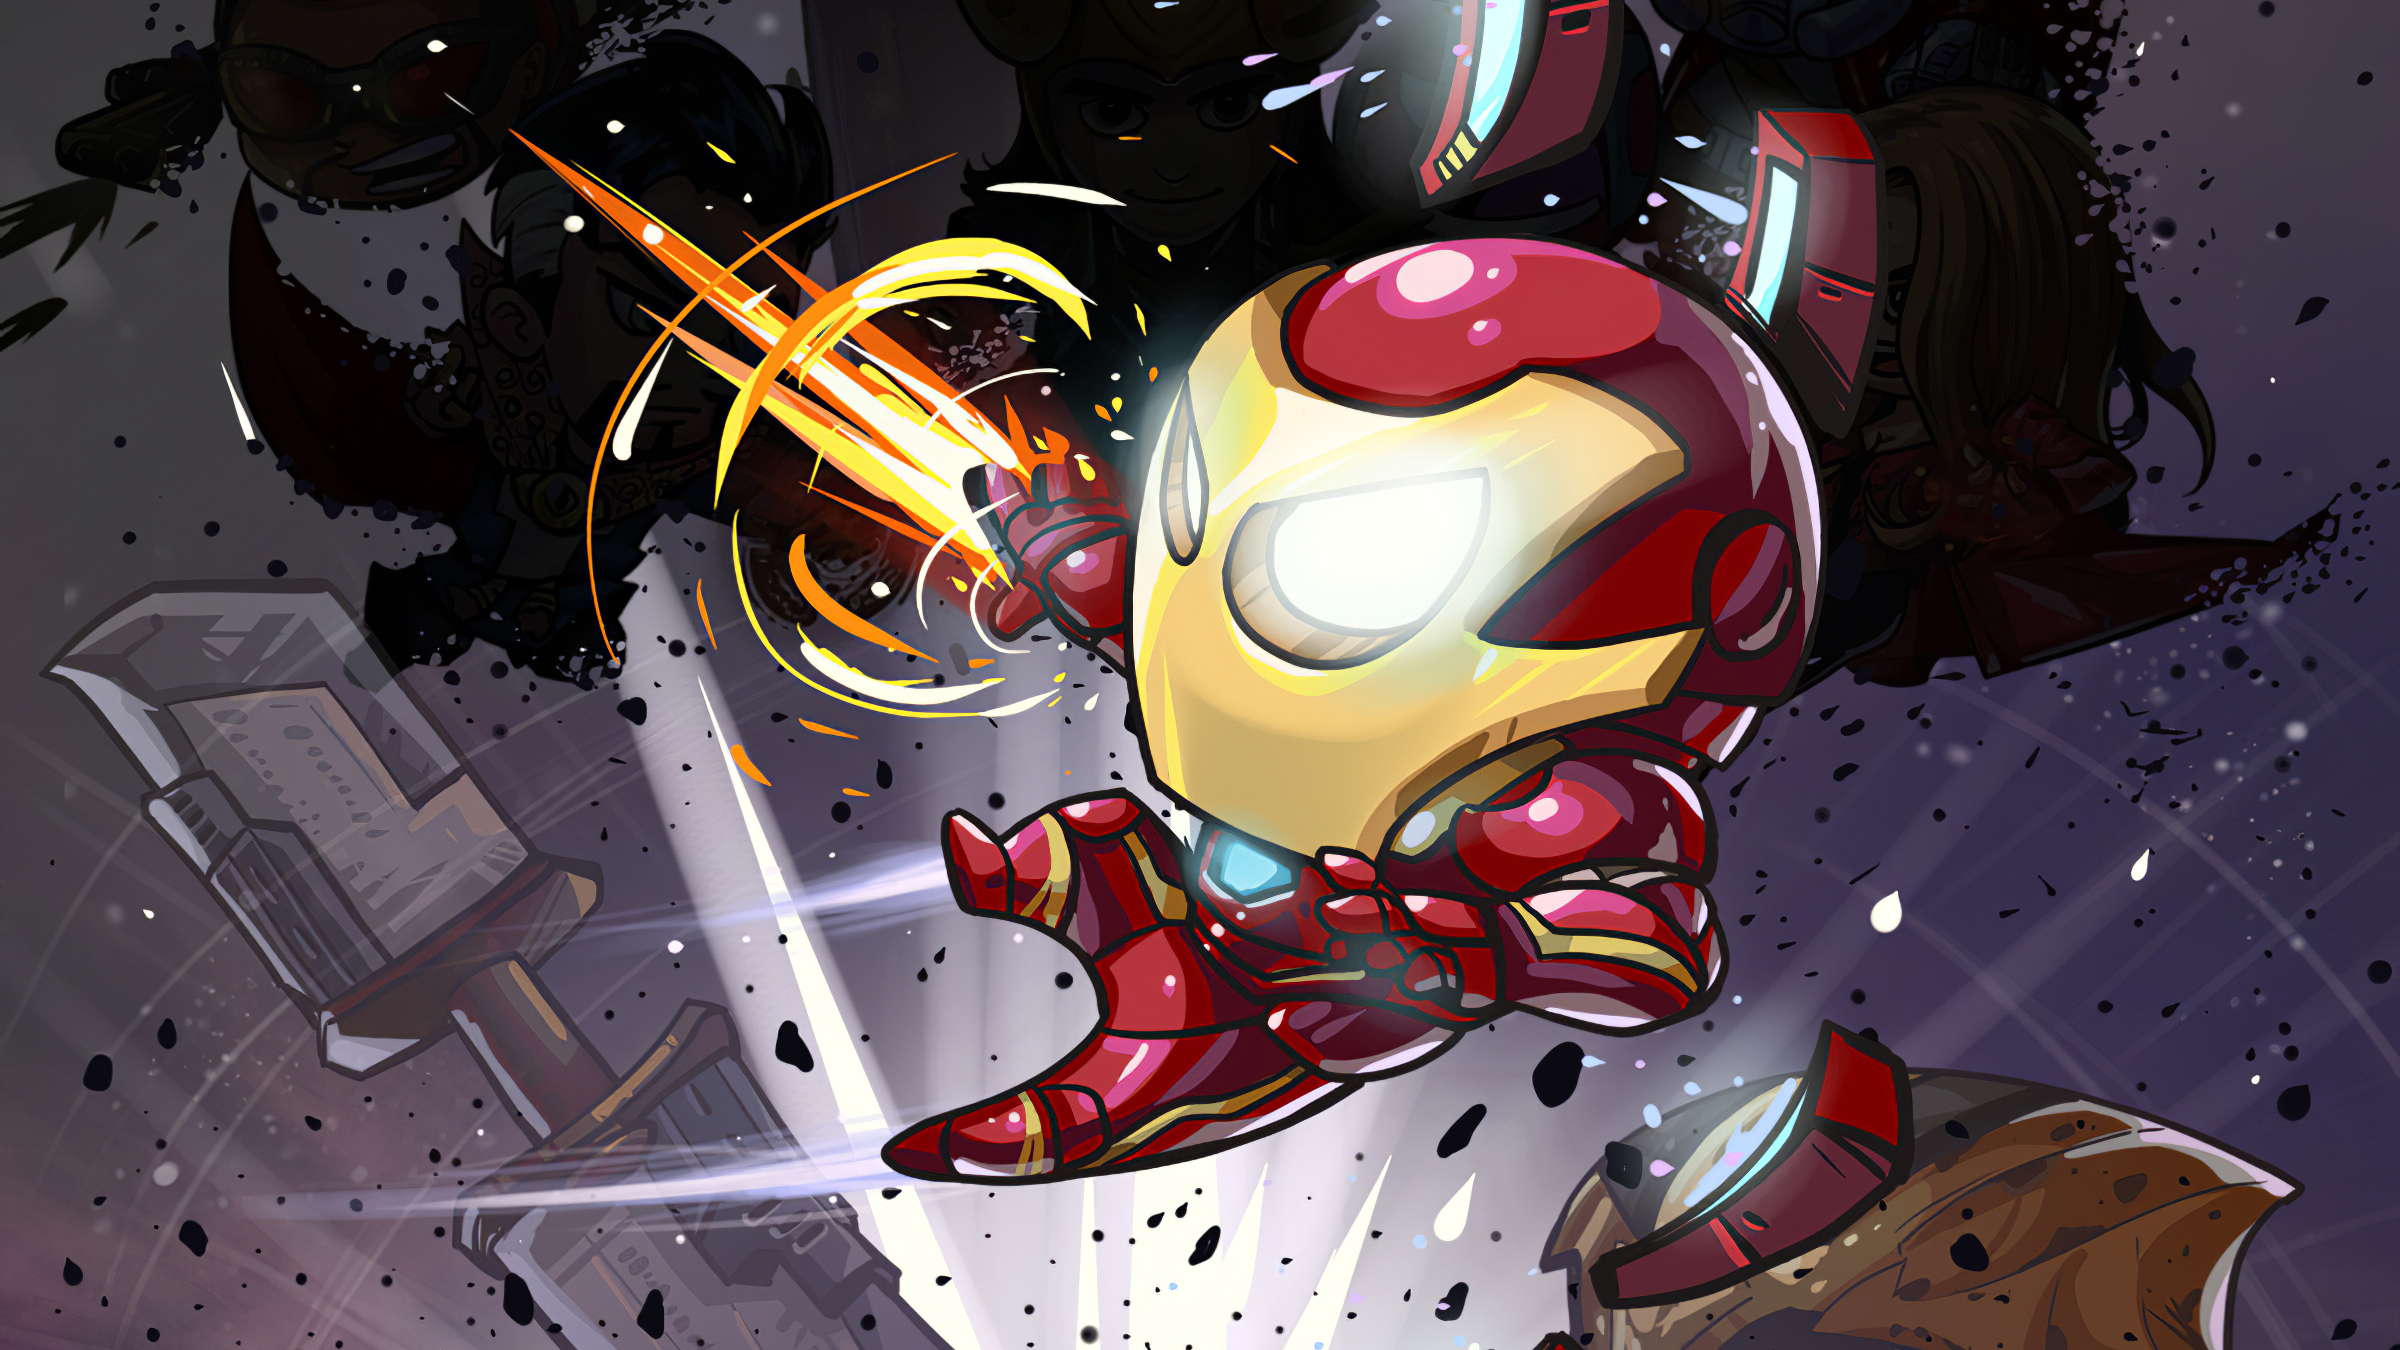 Iron Man Cartoon Marvel Art Wallpaper, HD Superheroes 4K Wallpapers,  Images, Photos and Background - Wallpapers Den